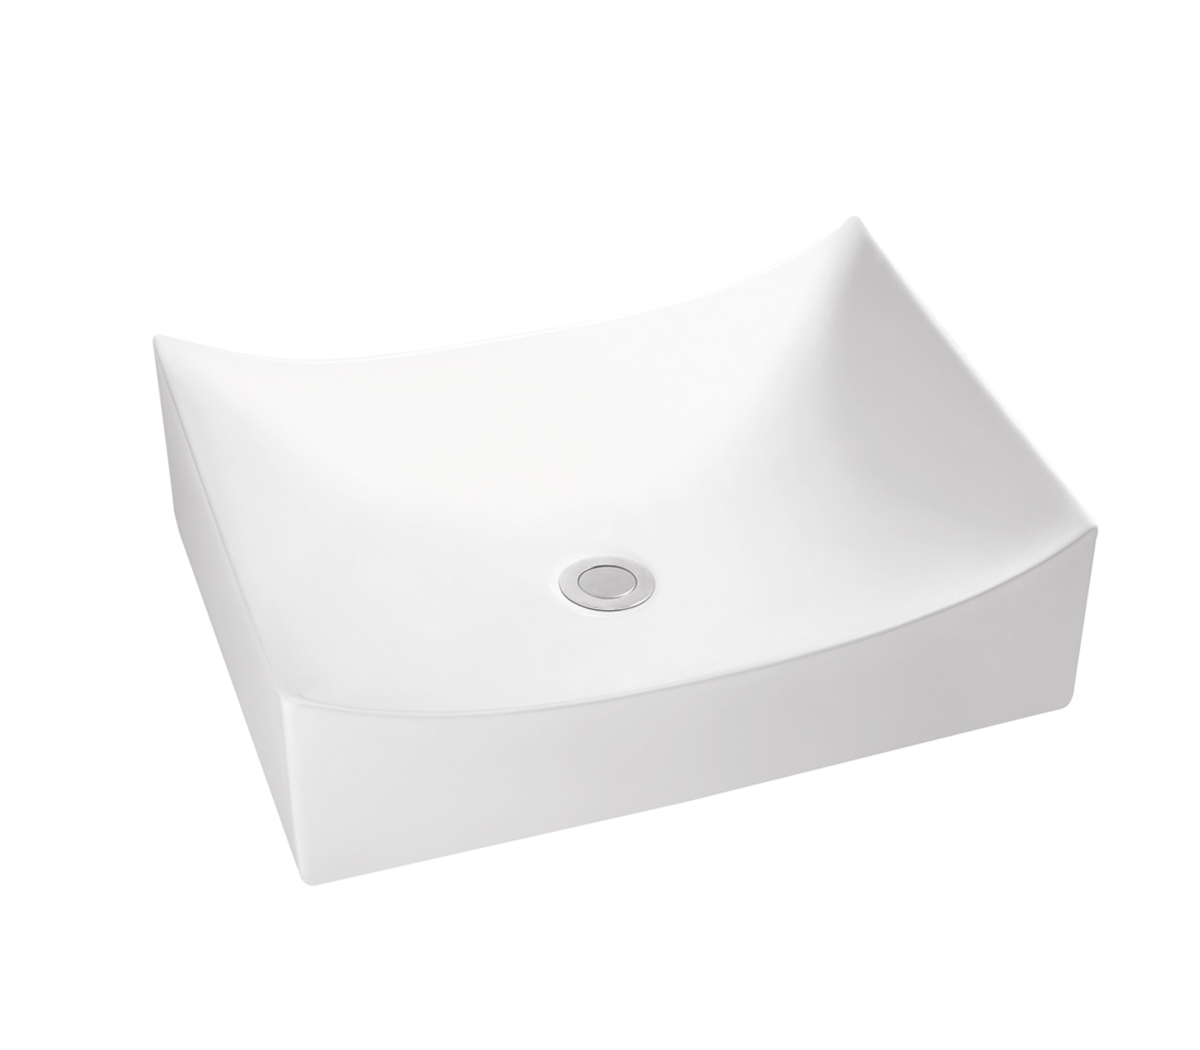 Tp-2300 White Artistic Porcelain Vessel Bathroom Sink, 15.75 X 15.75 X 5.12 In.